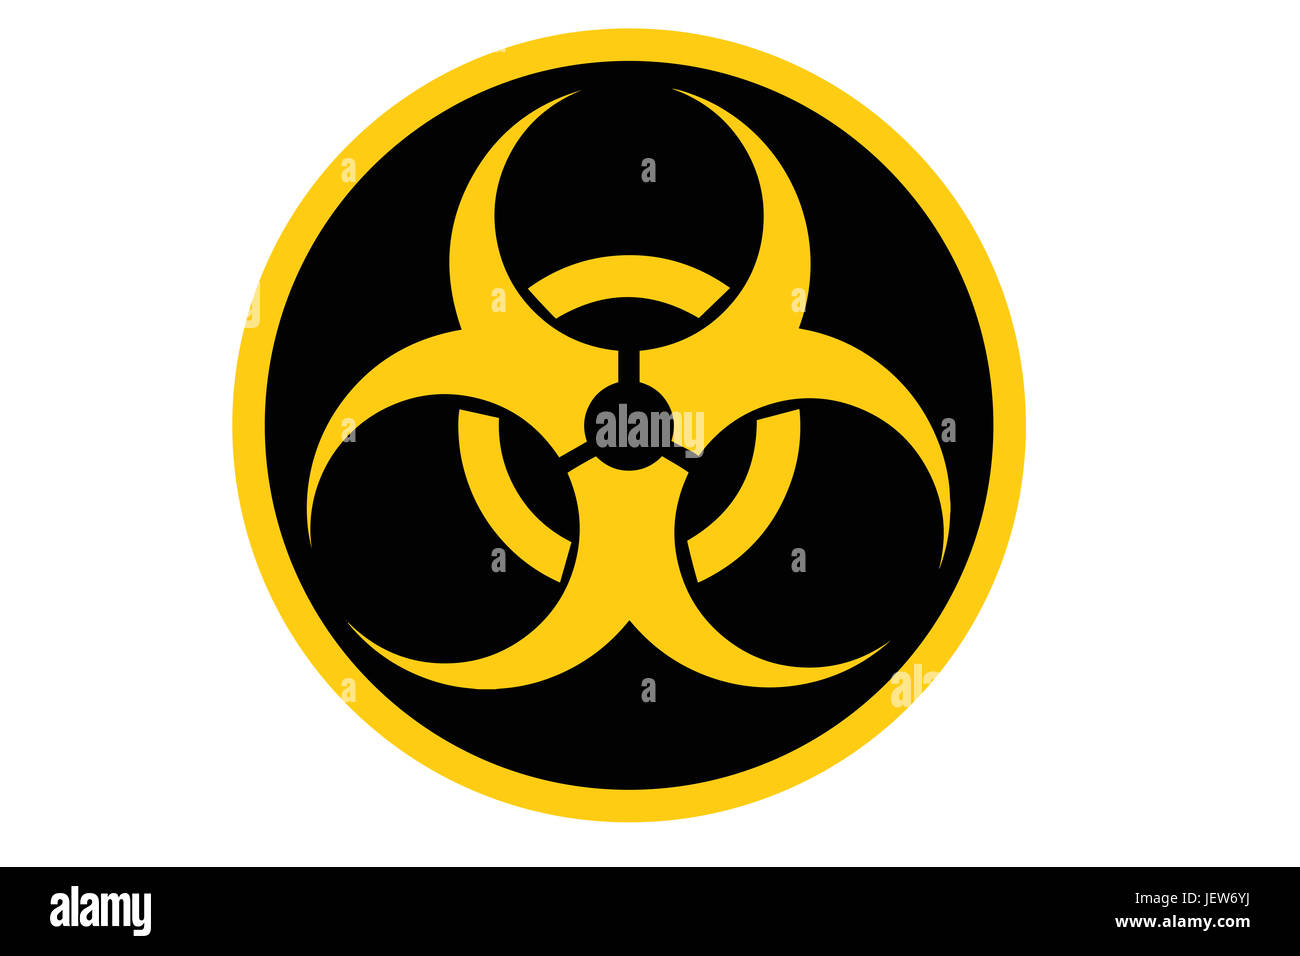 biohazard symbol isolated on white Stock Photo